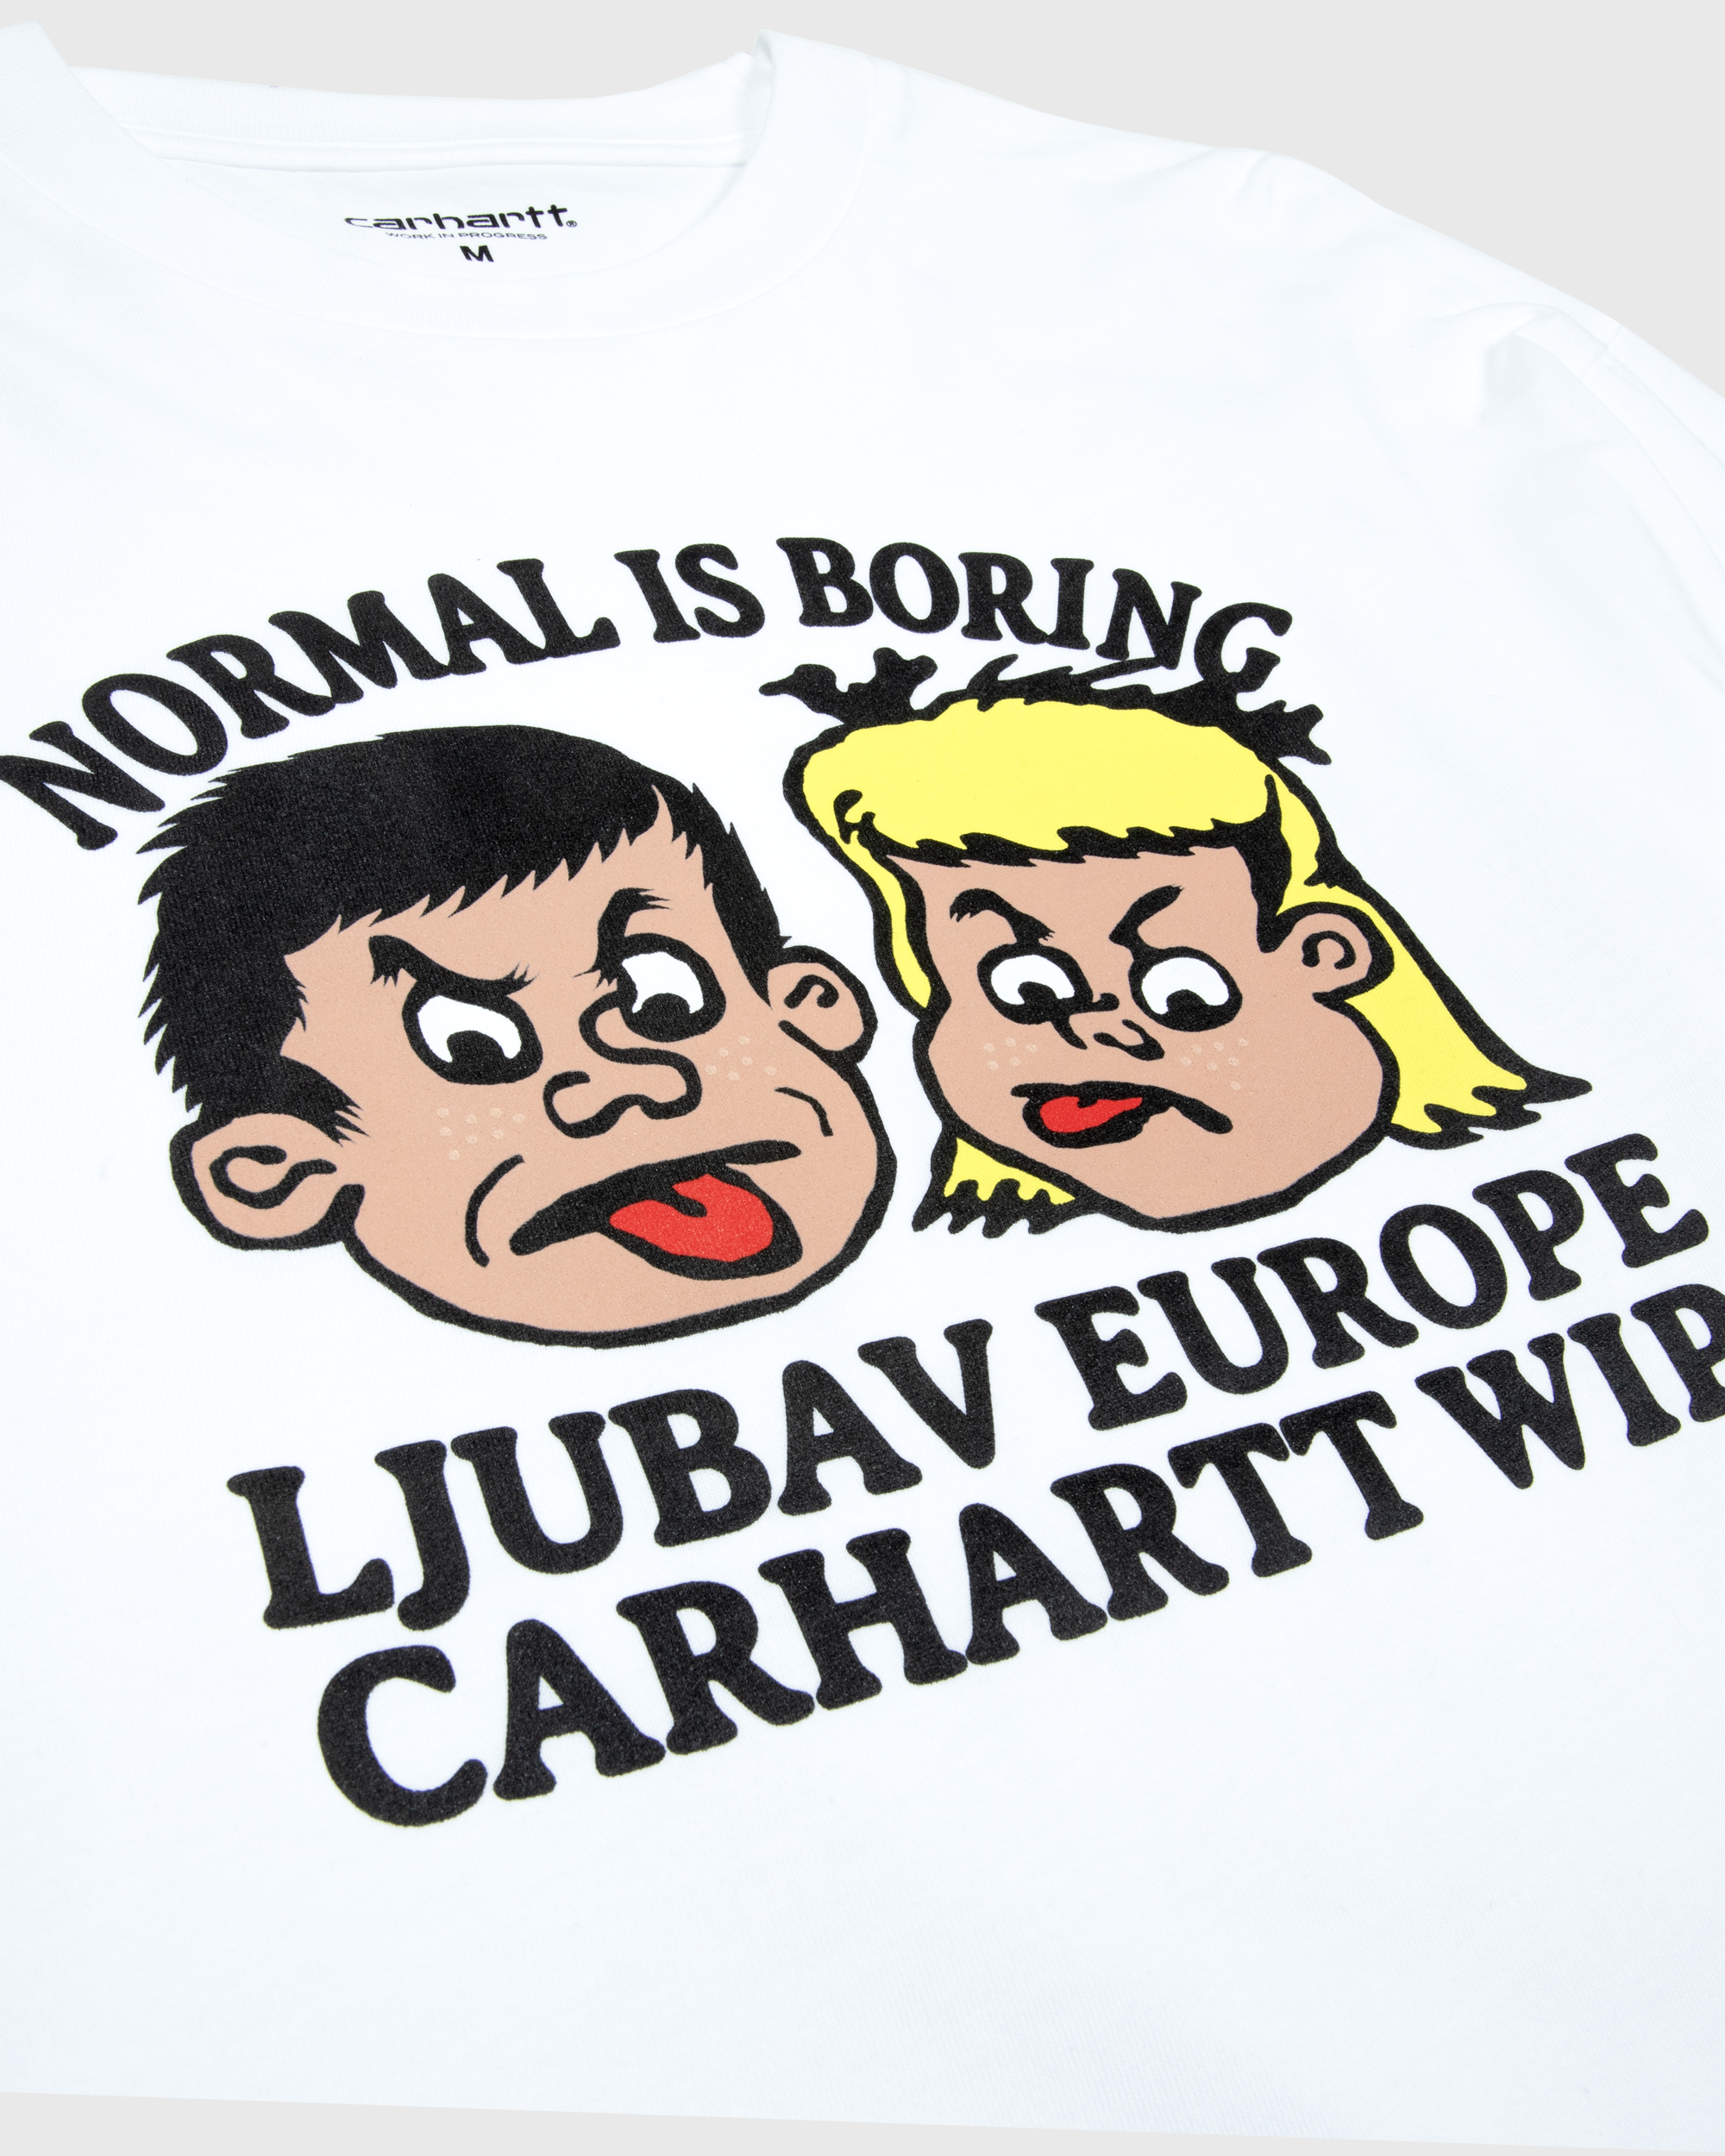 Ljubav x Carhartt WIP L/S Boring T-Shirt